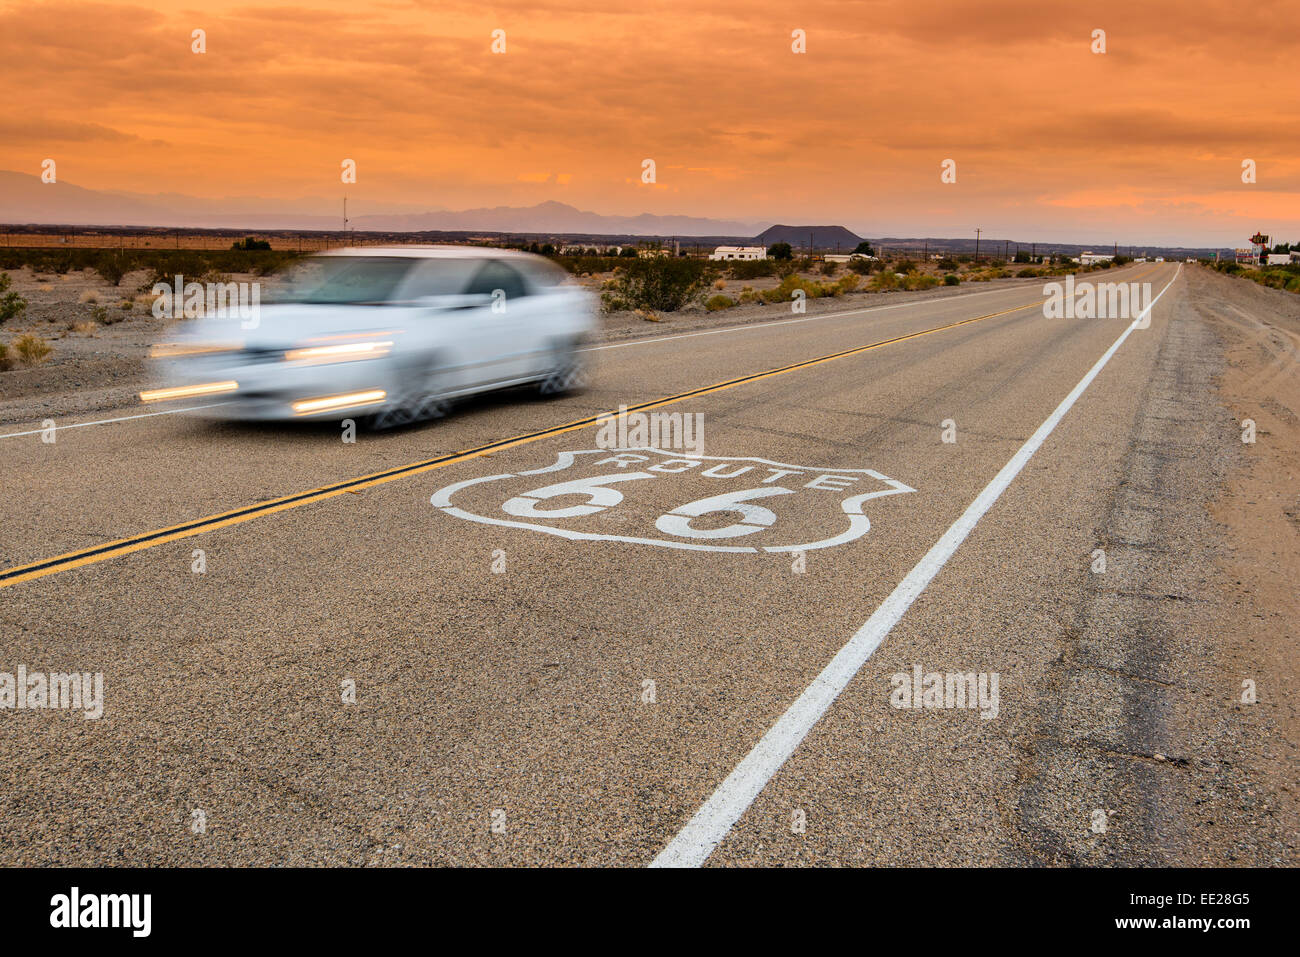 U.S. Route 66 horizontal road sign in sunset desert landscape, Amboy, California, USA Stock Photo